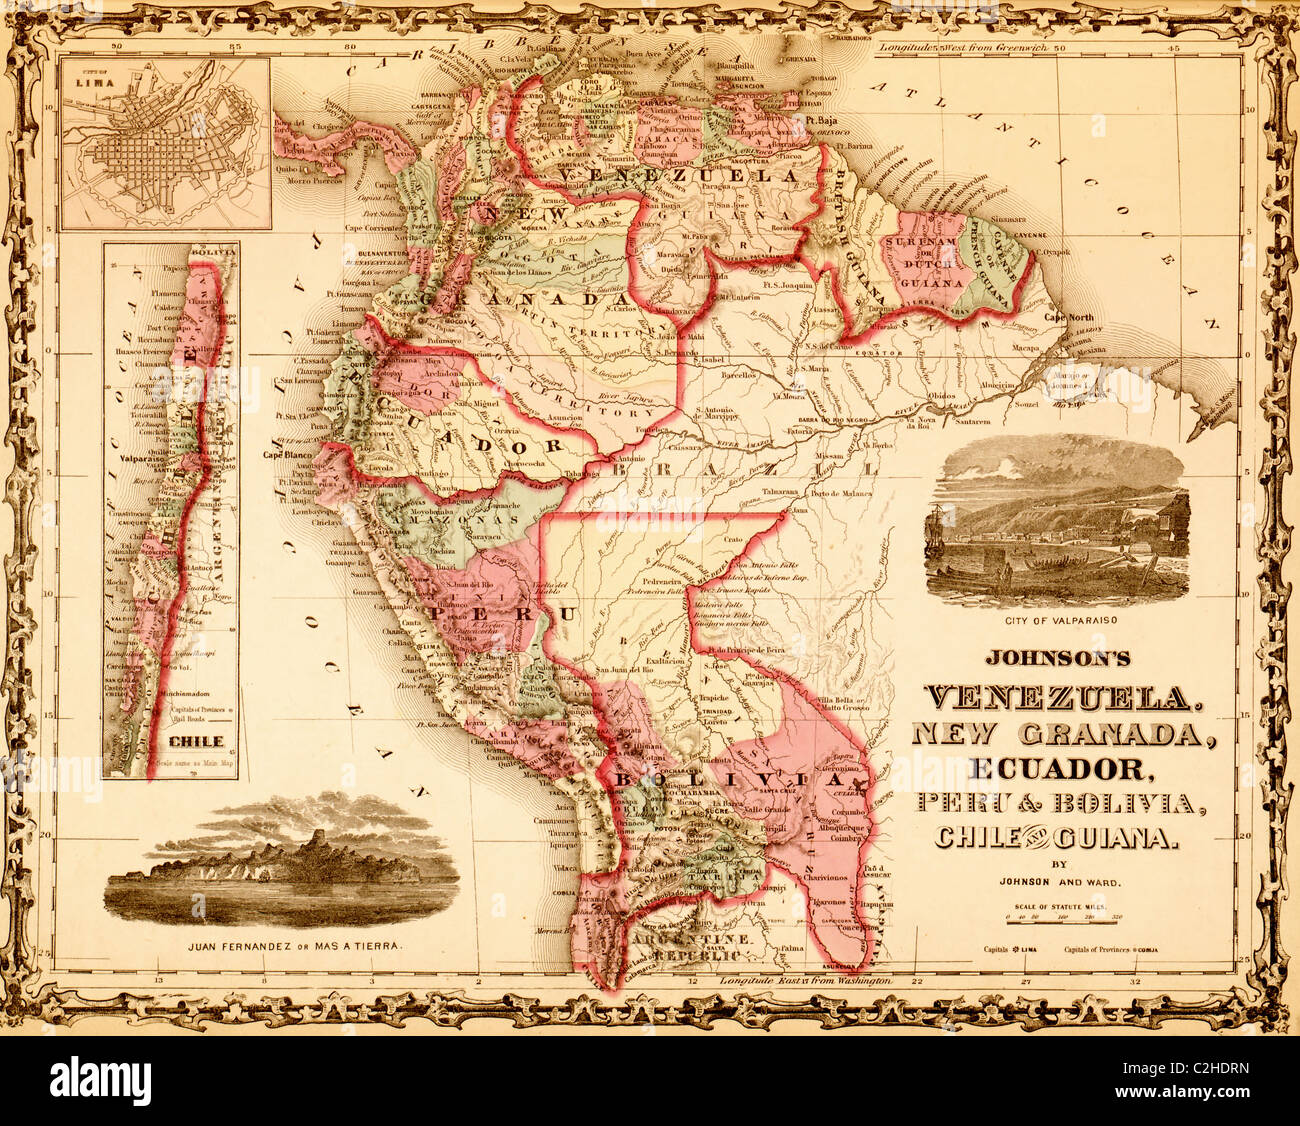 Venezuela, New Granada, Ecuador, Peru, Bolivia, Chile & Guiana - 1862 Stock Photo